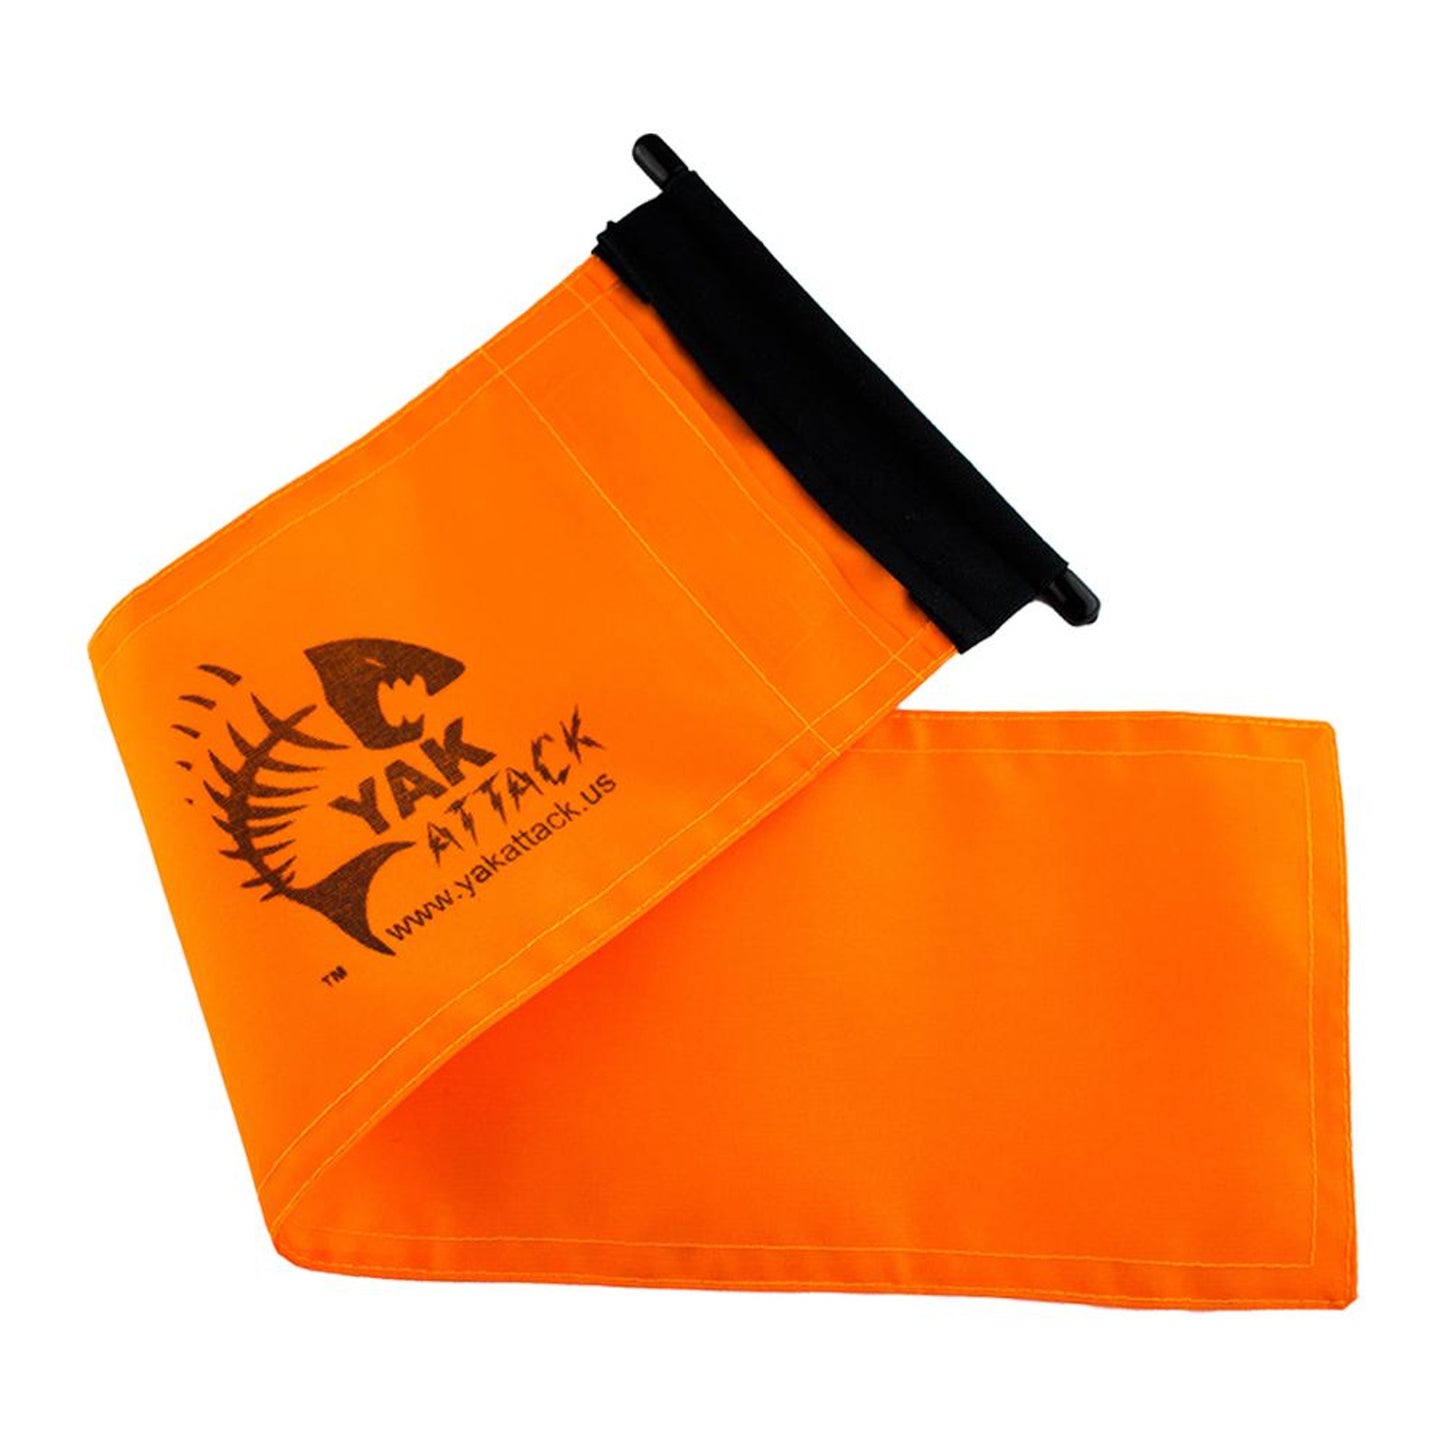 YakAttack 6 X 18 Orange ProGlo Kayak Flag Kit